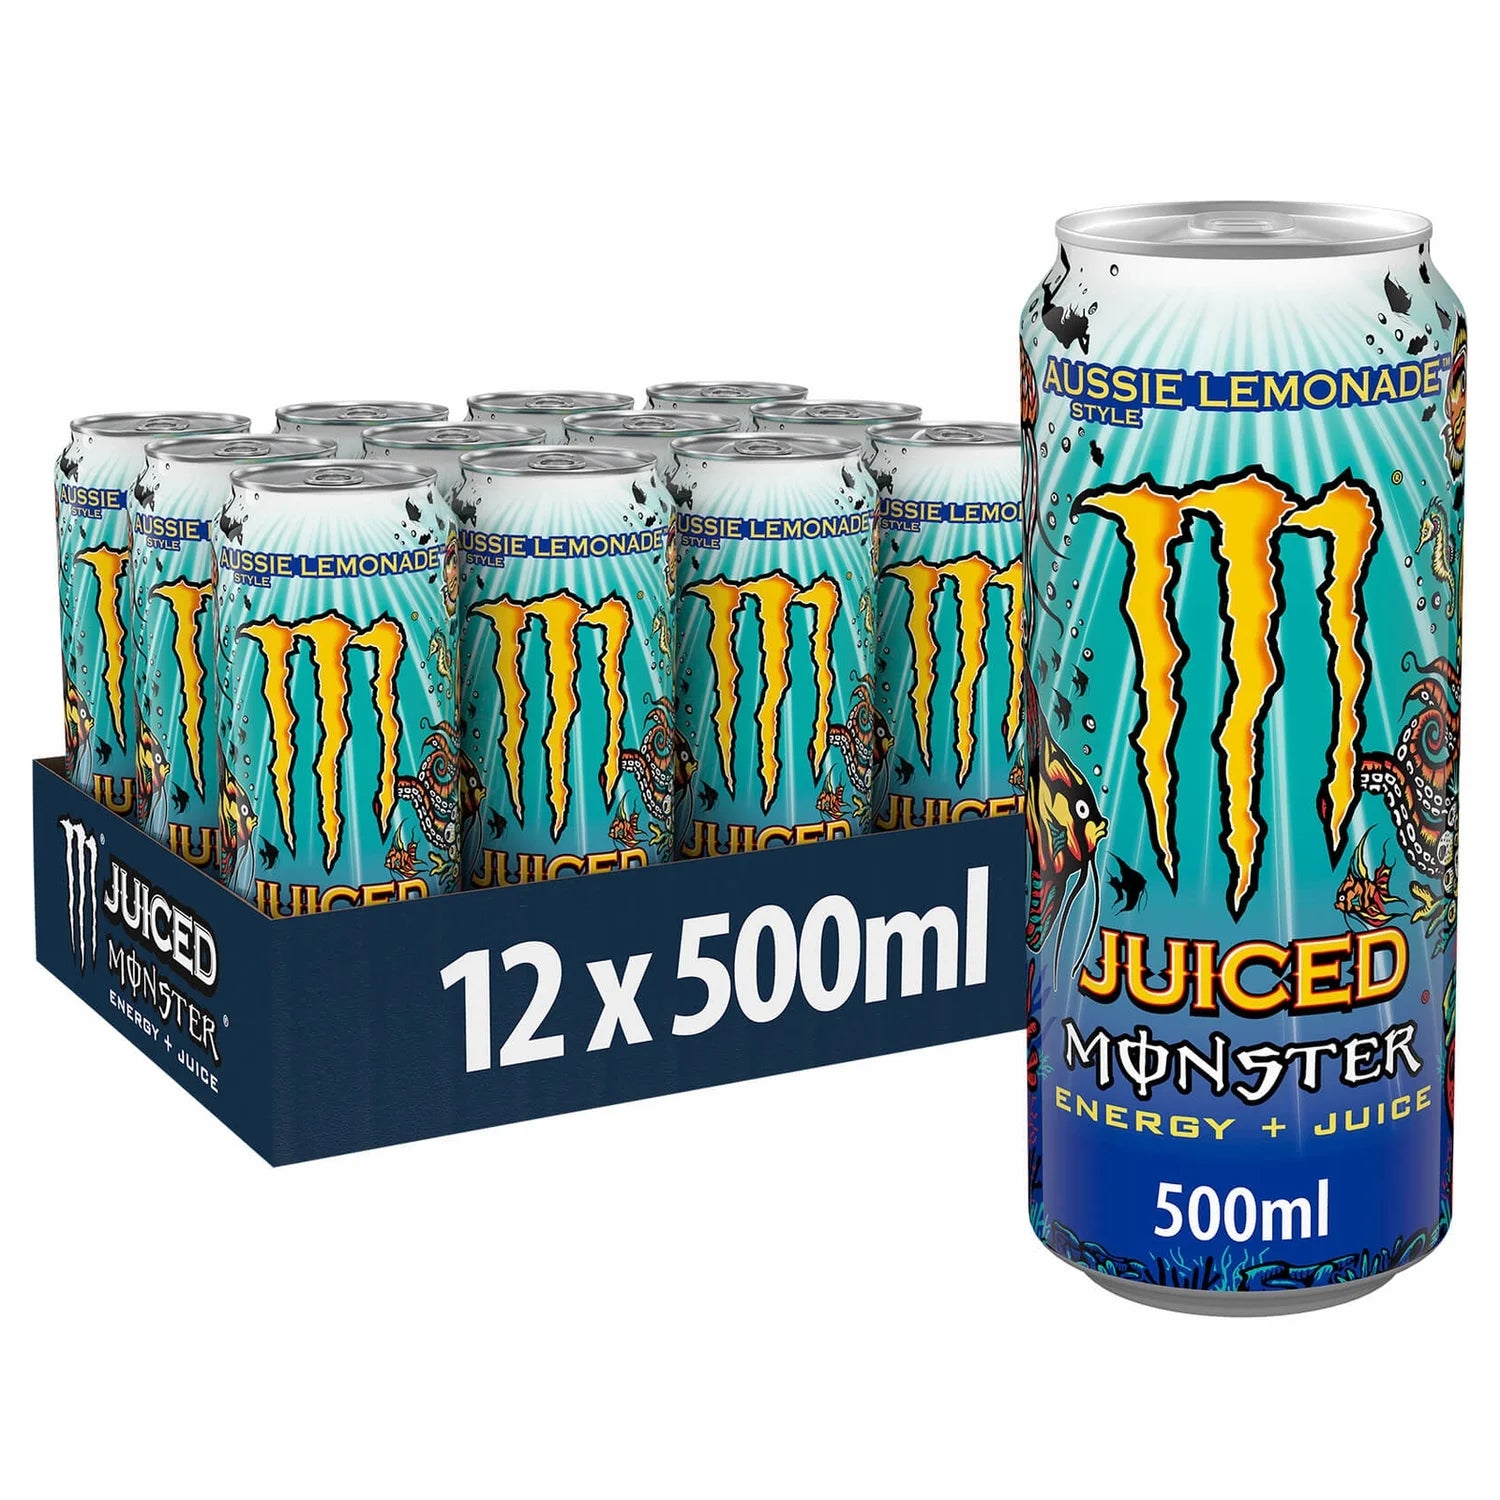 Monster Energy Drink Aussie Lemonade - 500ml - Case of 12